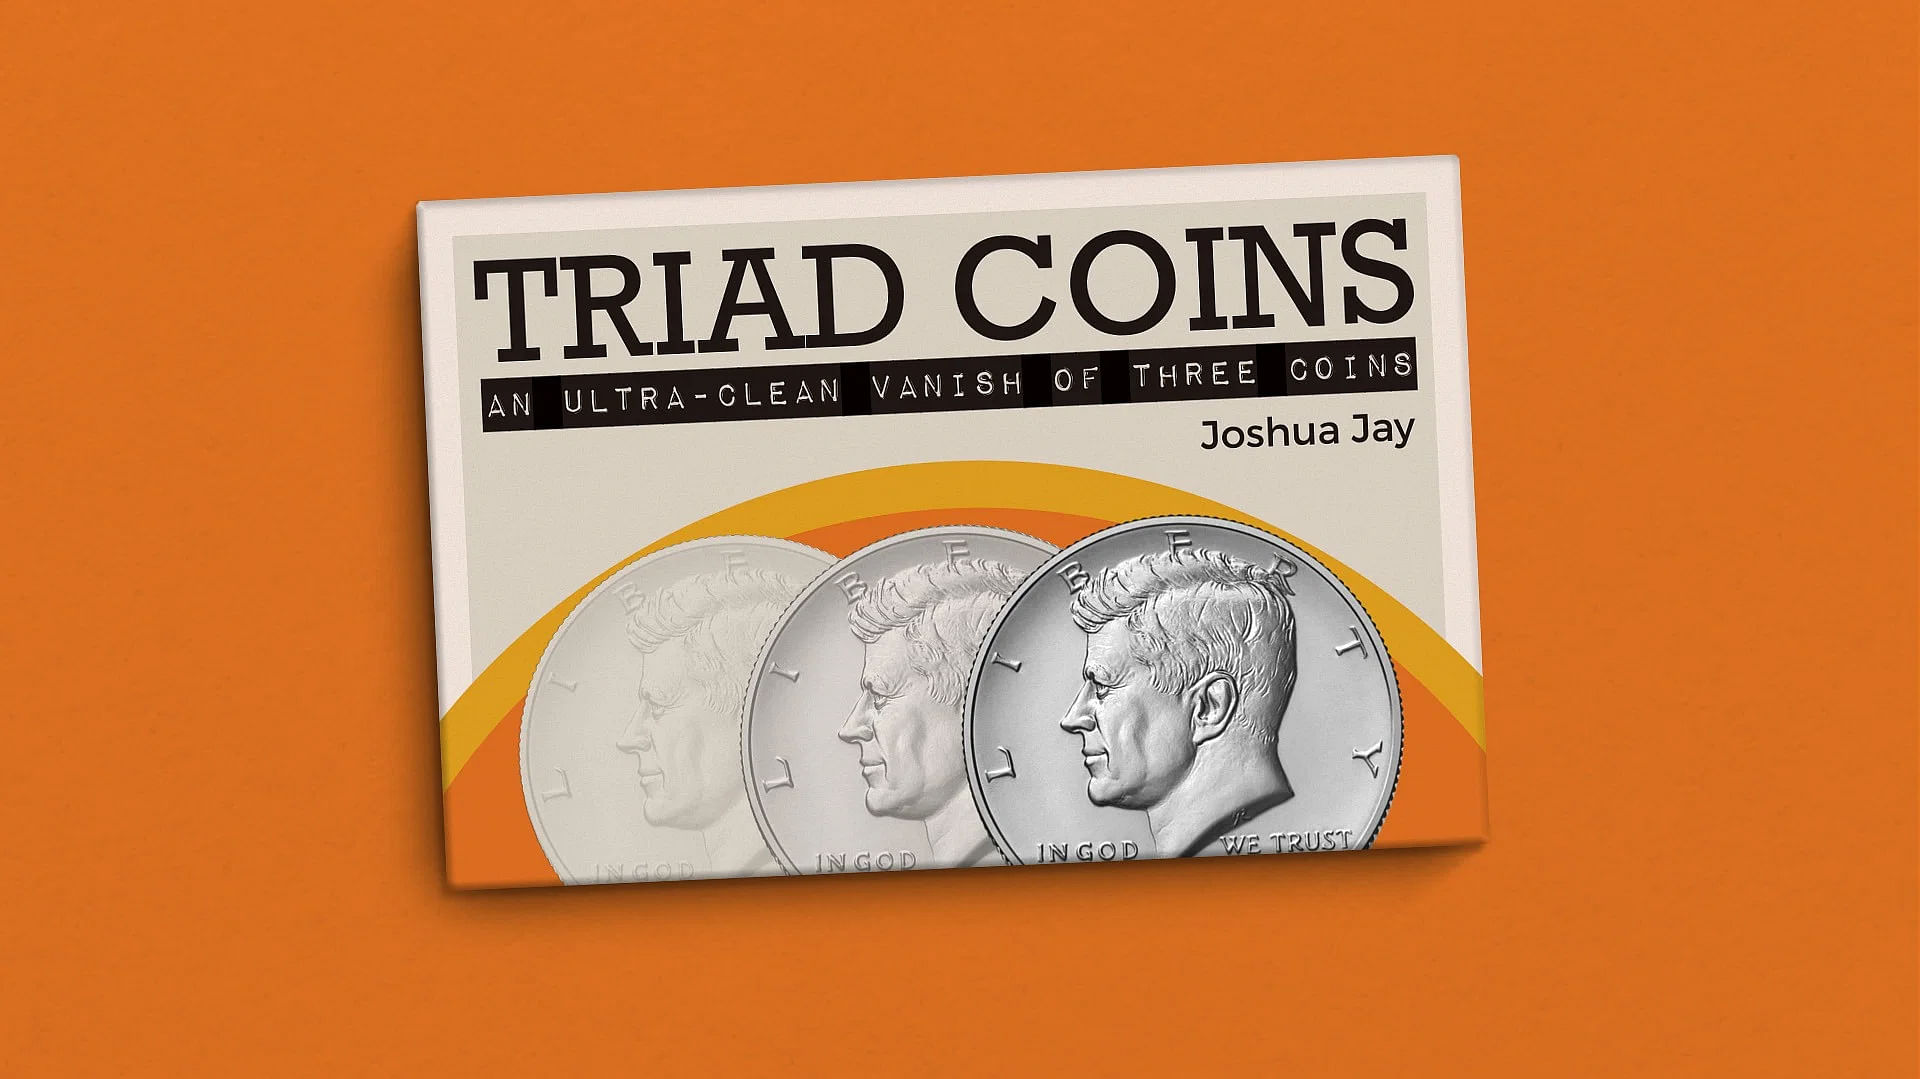 triad coins coin magic trick by Joshua Jay and Vanishing inc magic shop